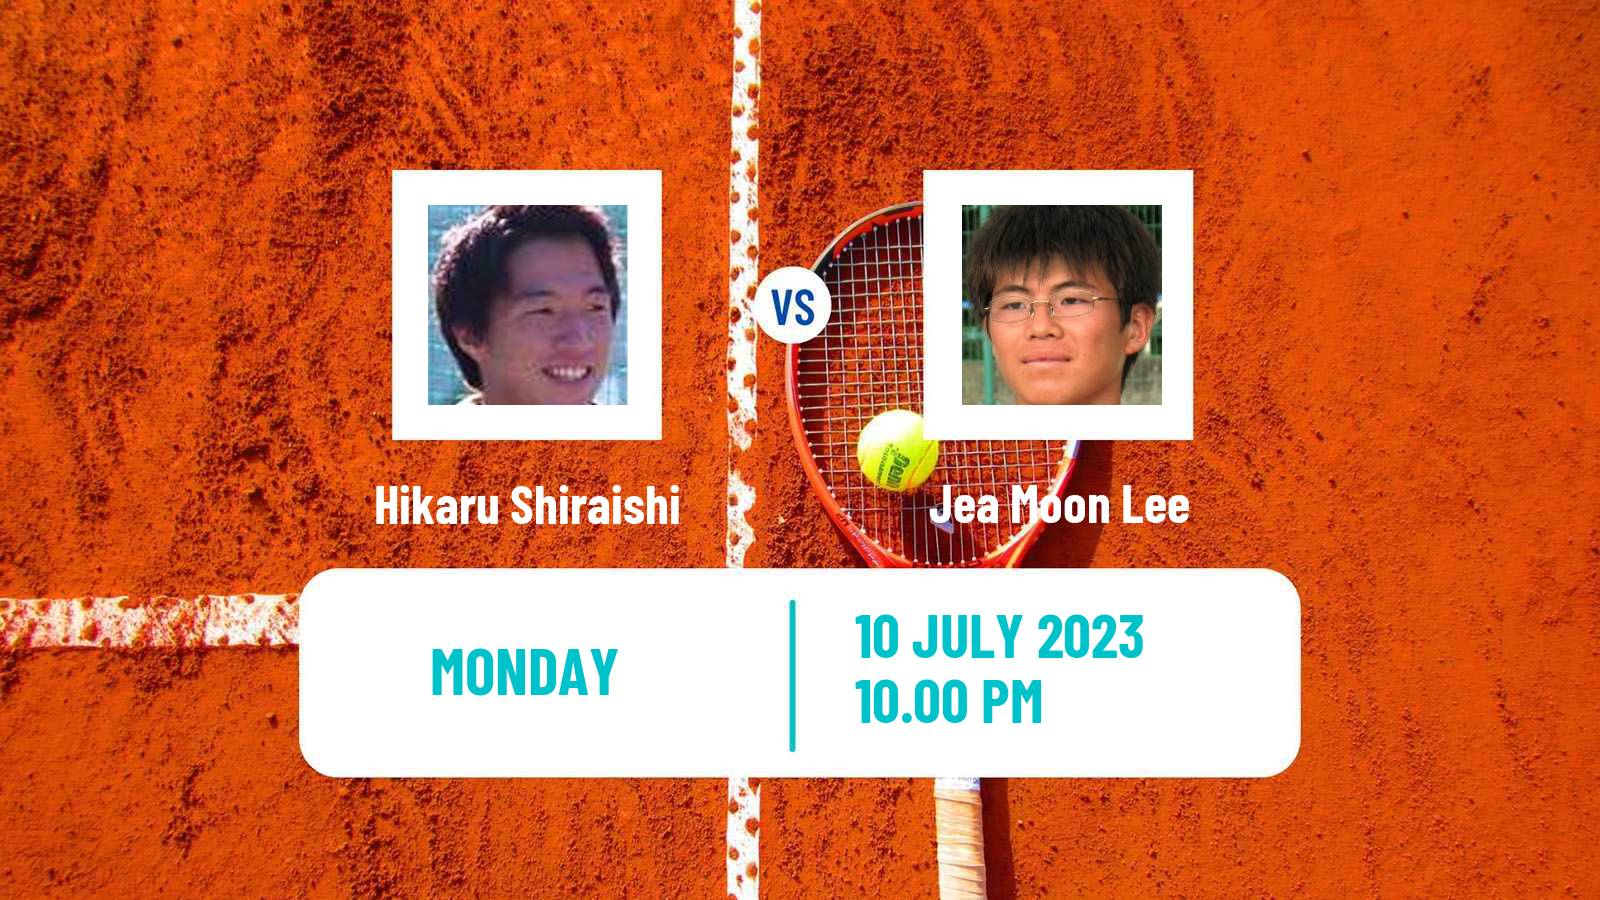 Tennis ITF M15 Nakhon Si Thammarat 4 Men Hikaru Shiraishi - Jea Moon Lee